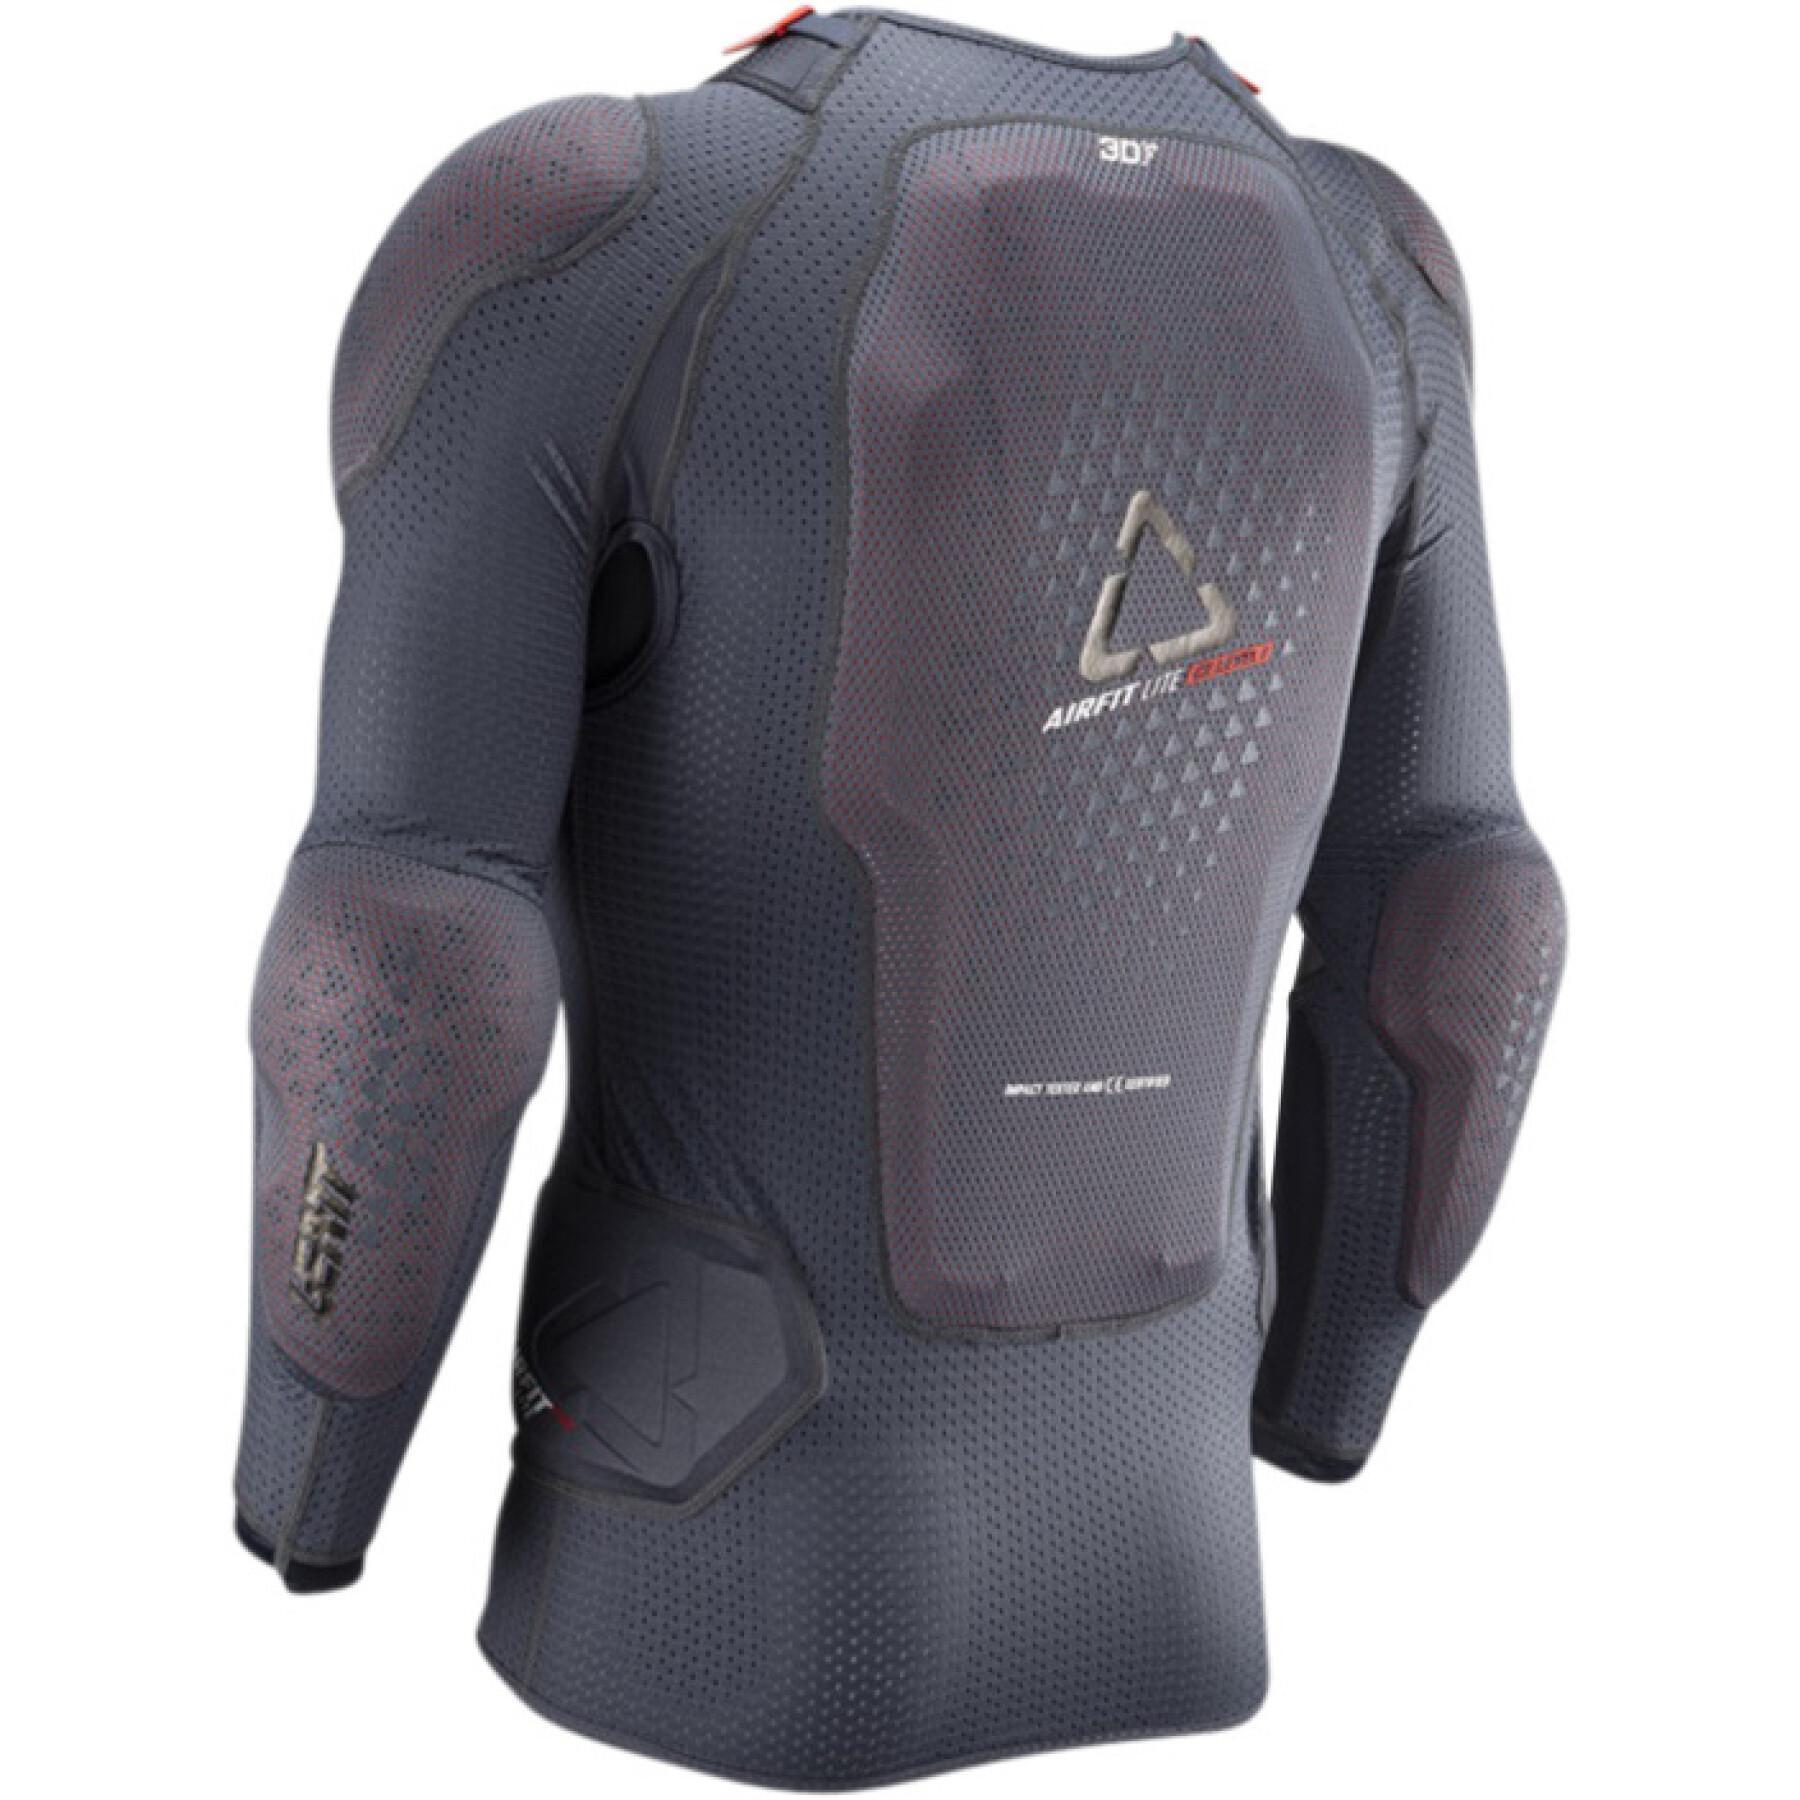 Protective vest Leatt Protector 3DF AirFit